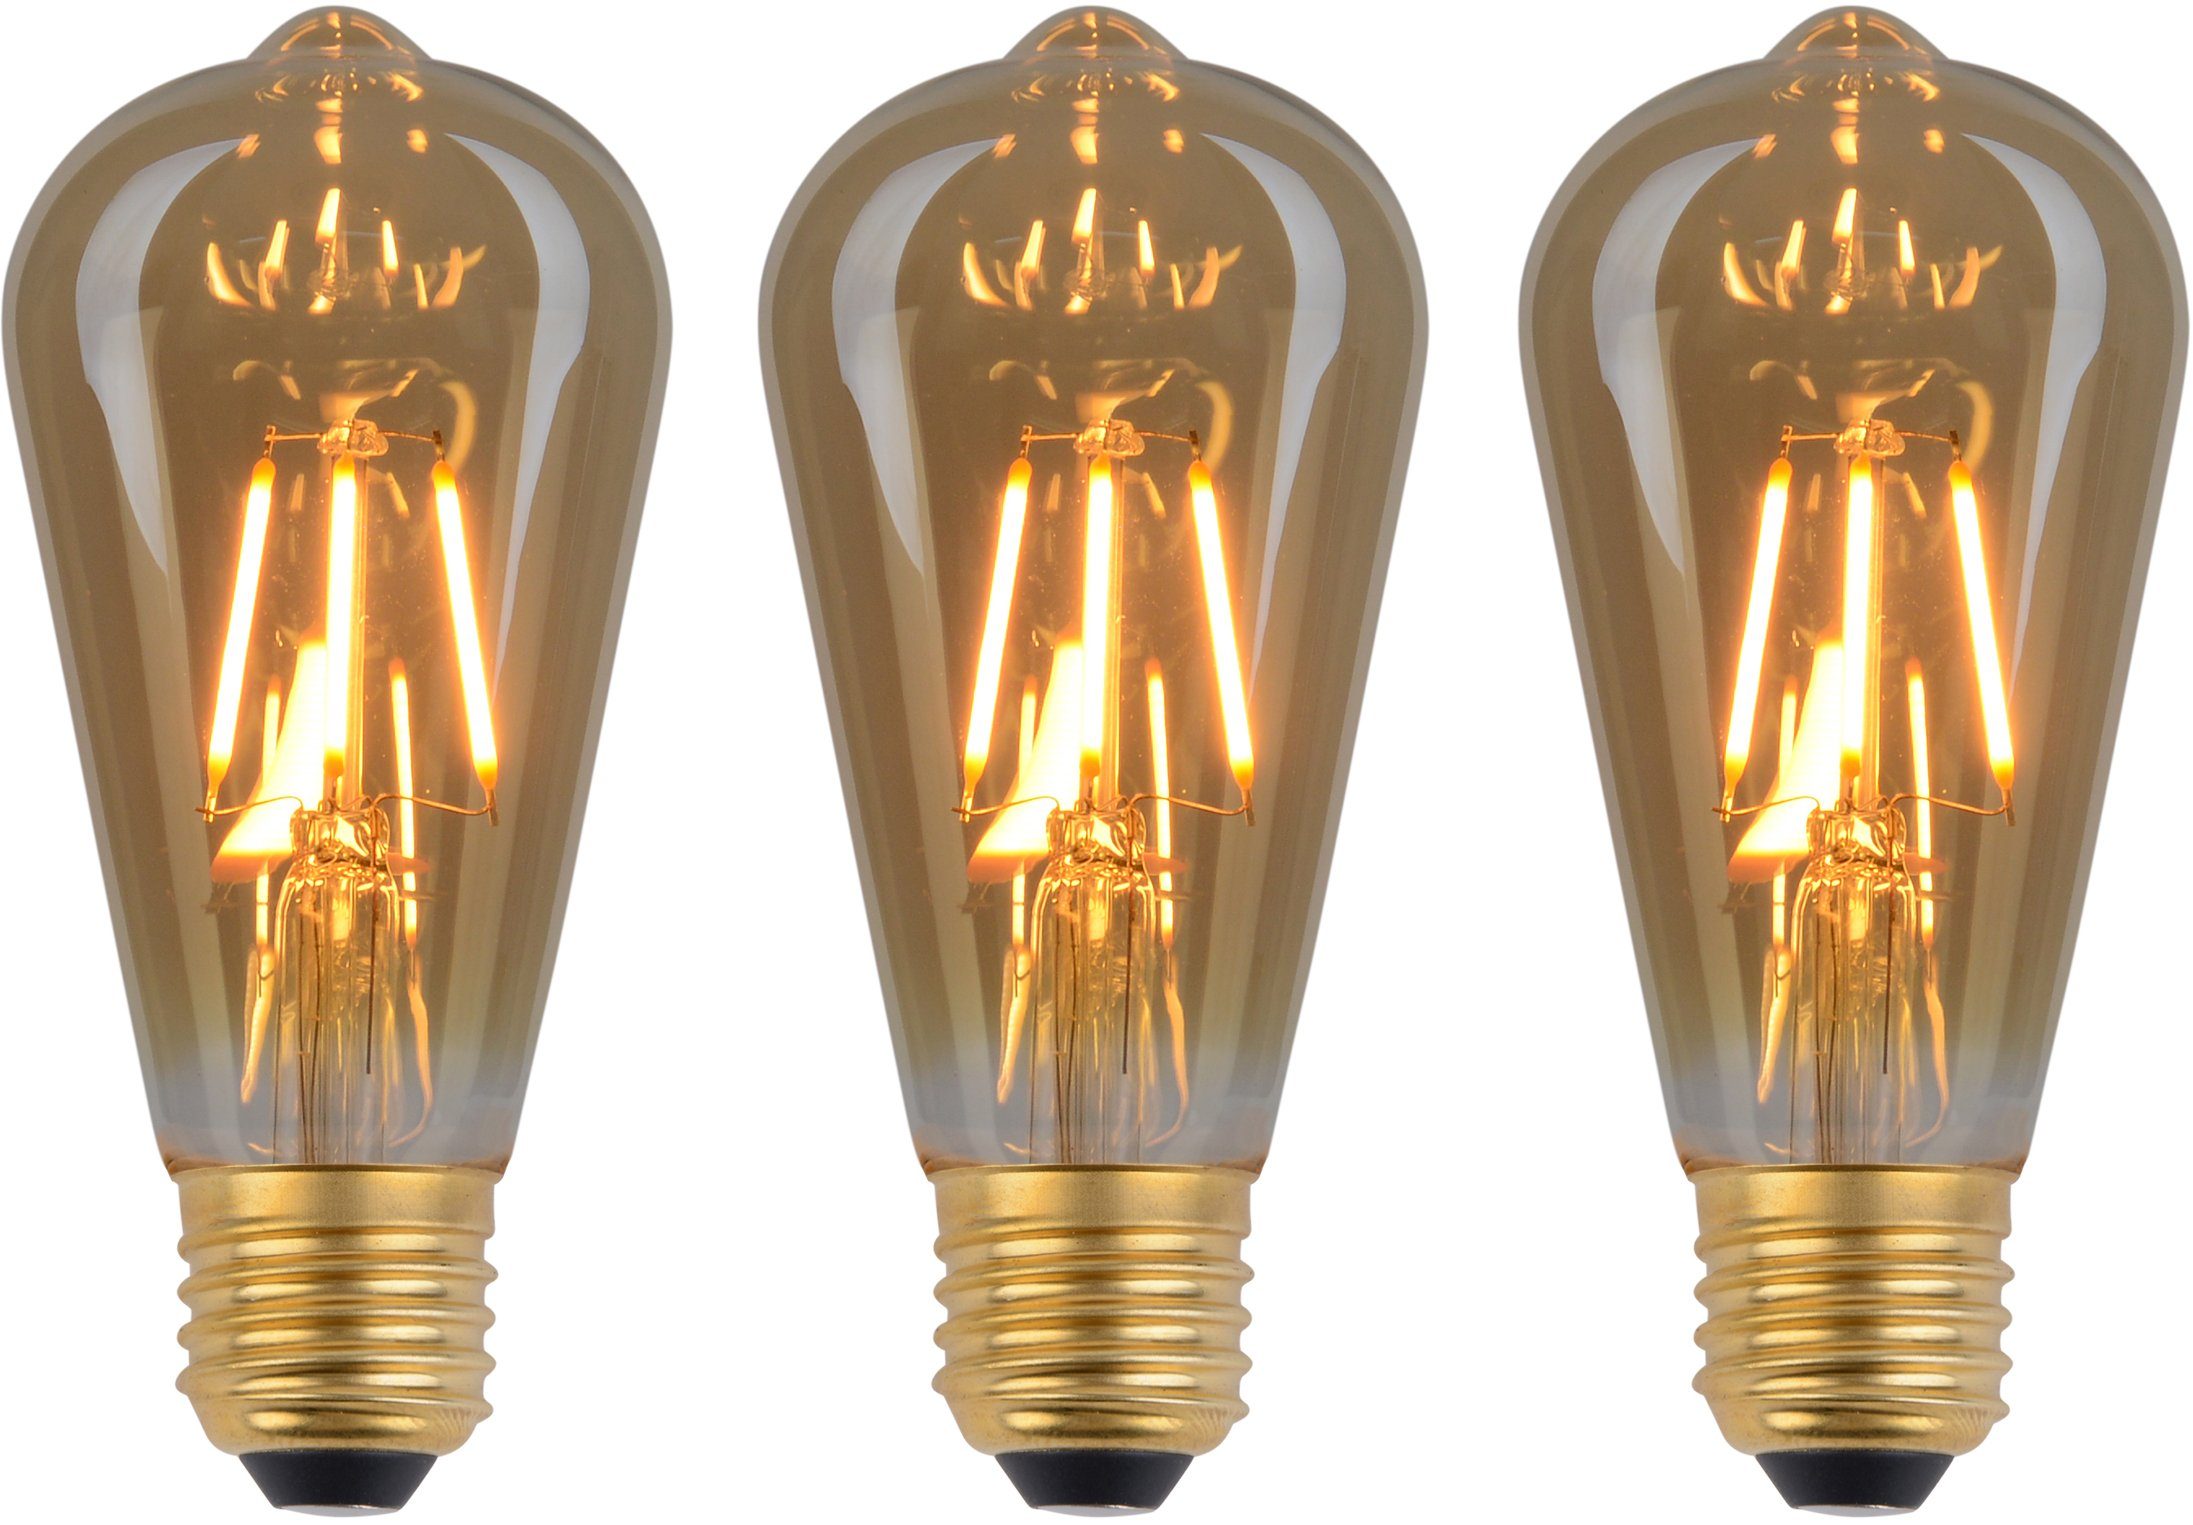 näve »LED Leuchtmittel E274W 3er Set« LED Leuchtmittel, E27, 3 Stück, Warmweiß, Set 3 Stück, dimmbar online kaufen | OTTO